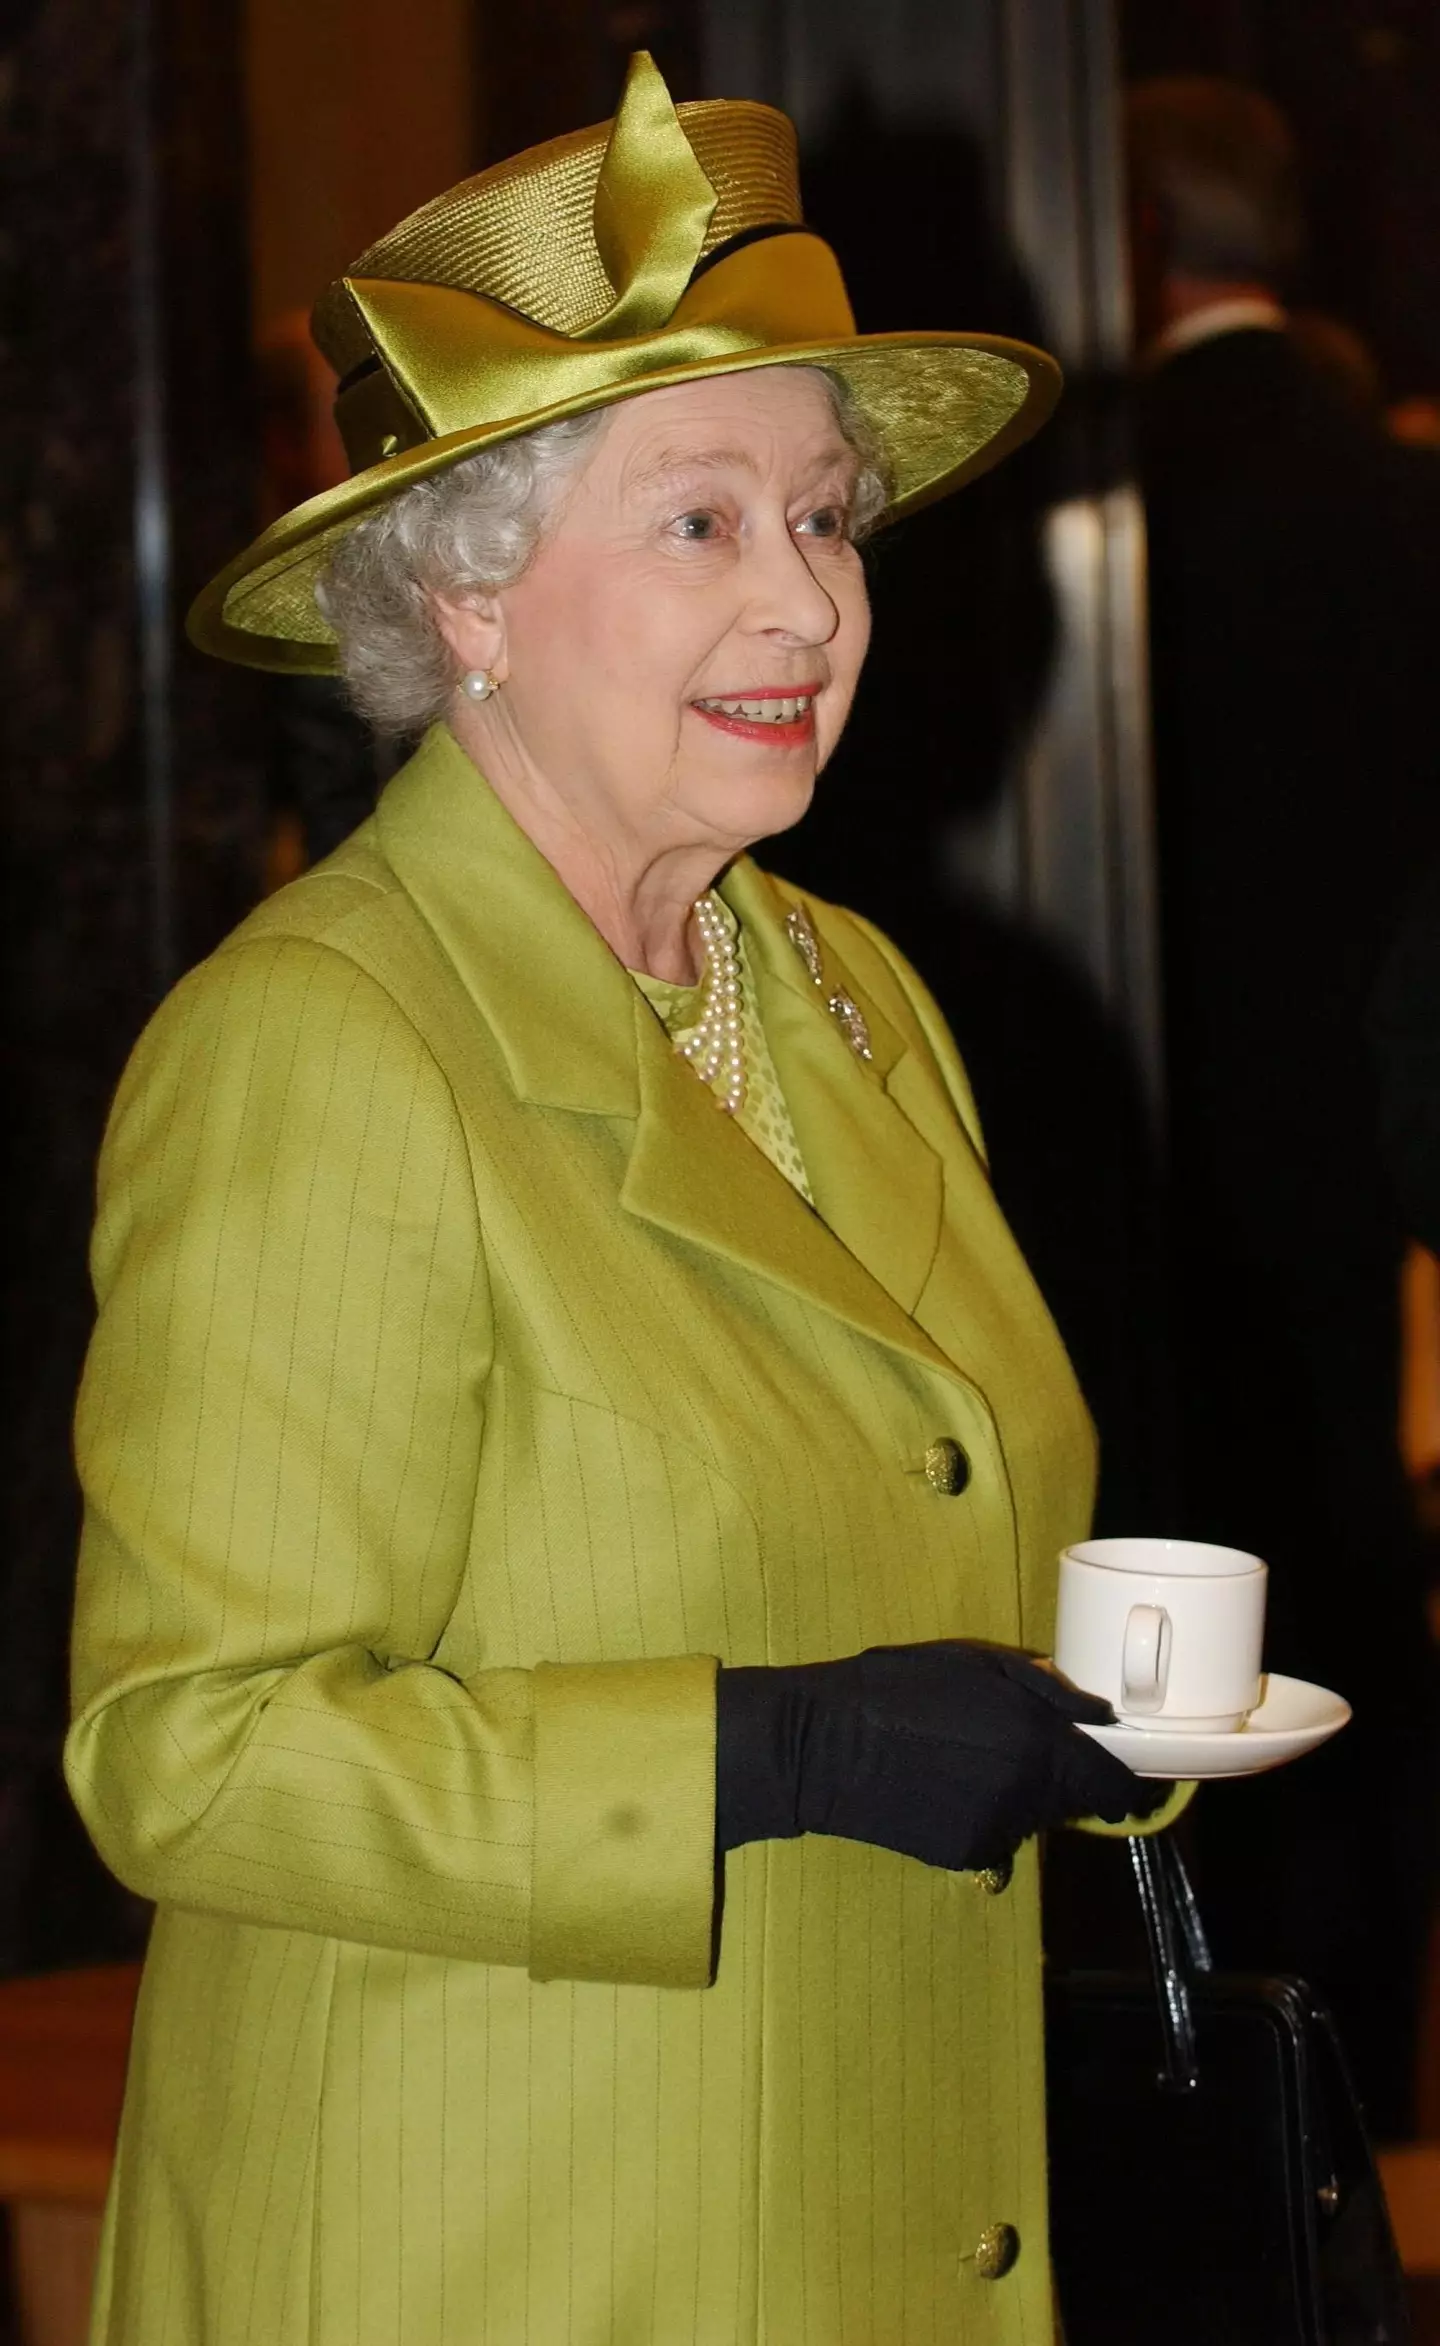 Queen Elizabeth with a cup of tea, credit: Alamy